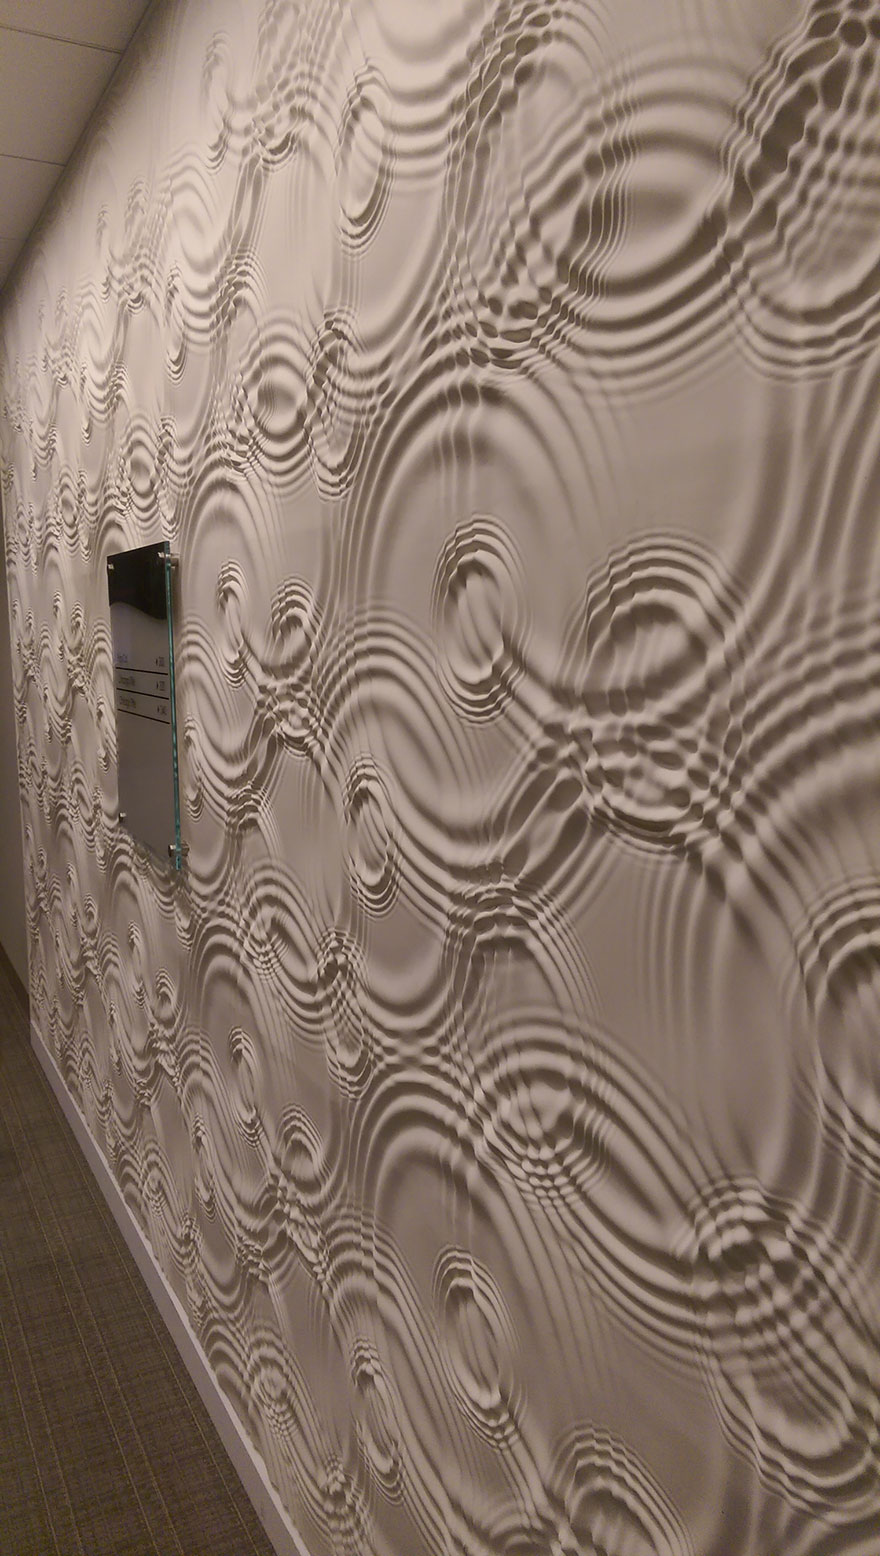 Rippling Liquid Illusion Wall